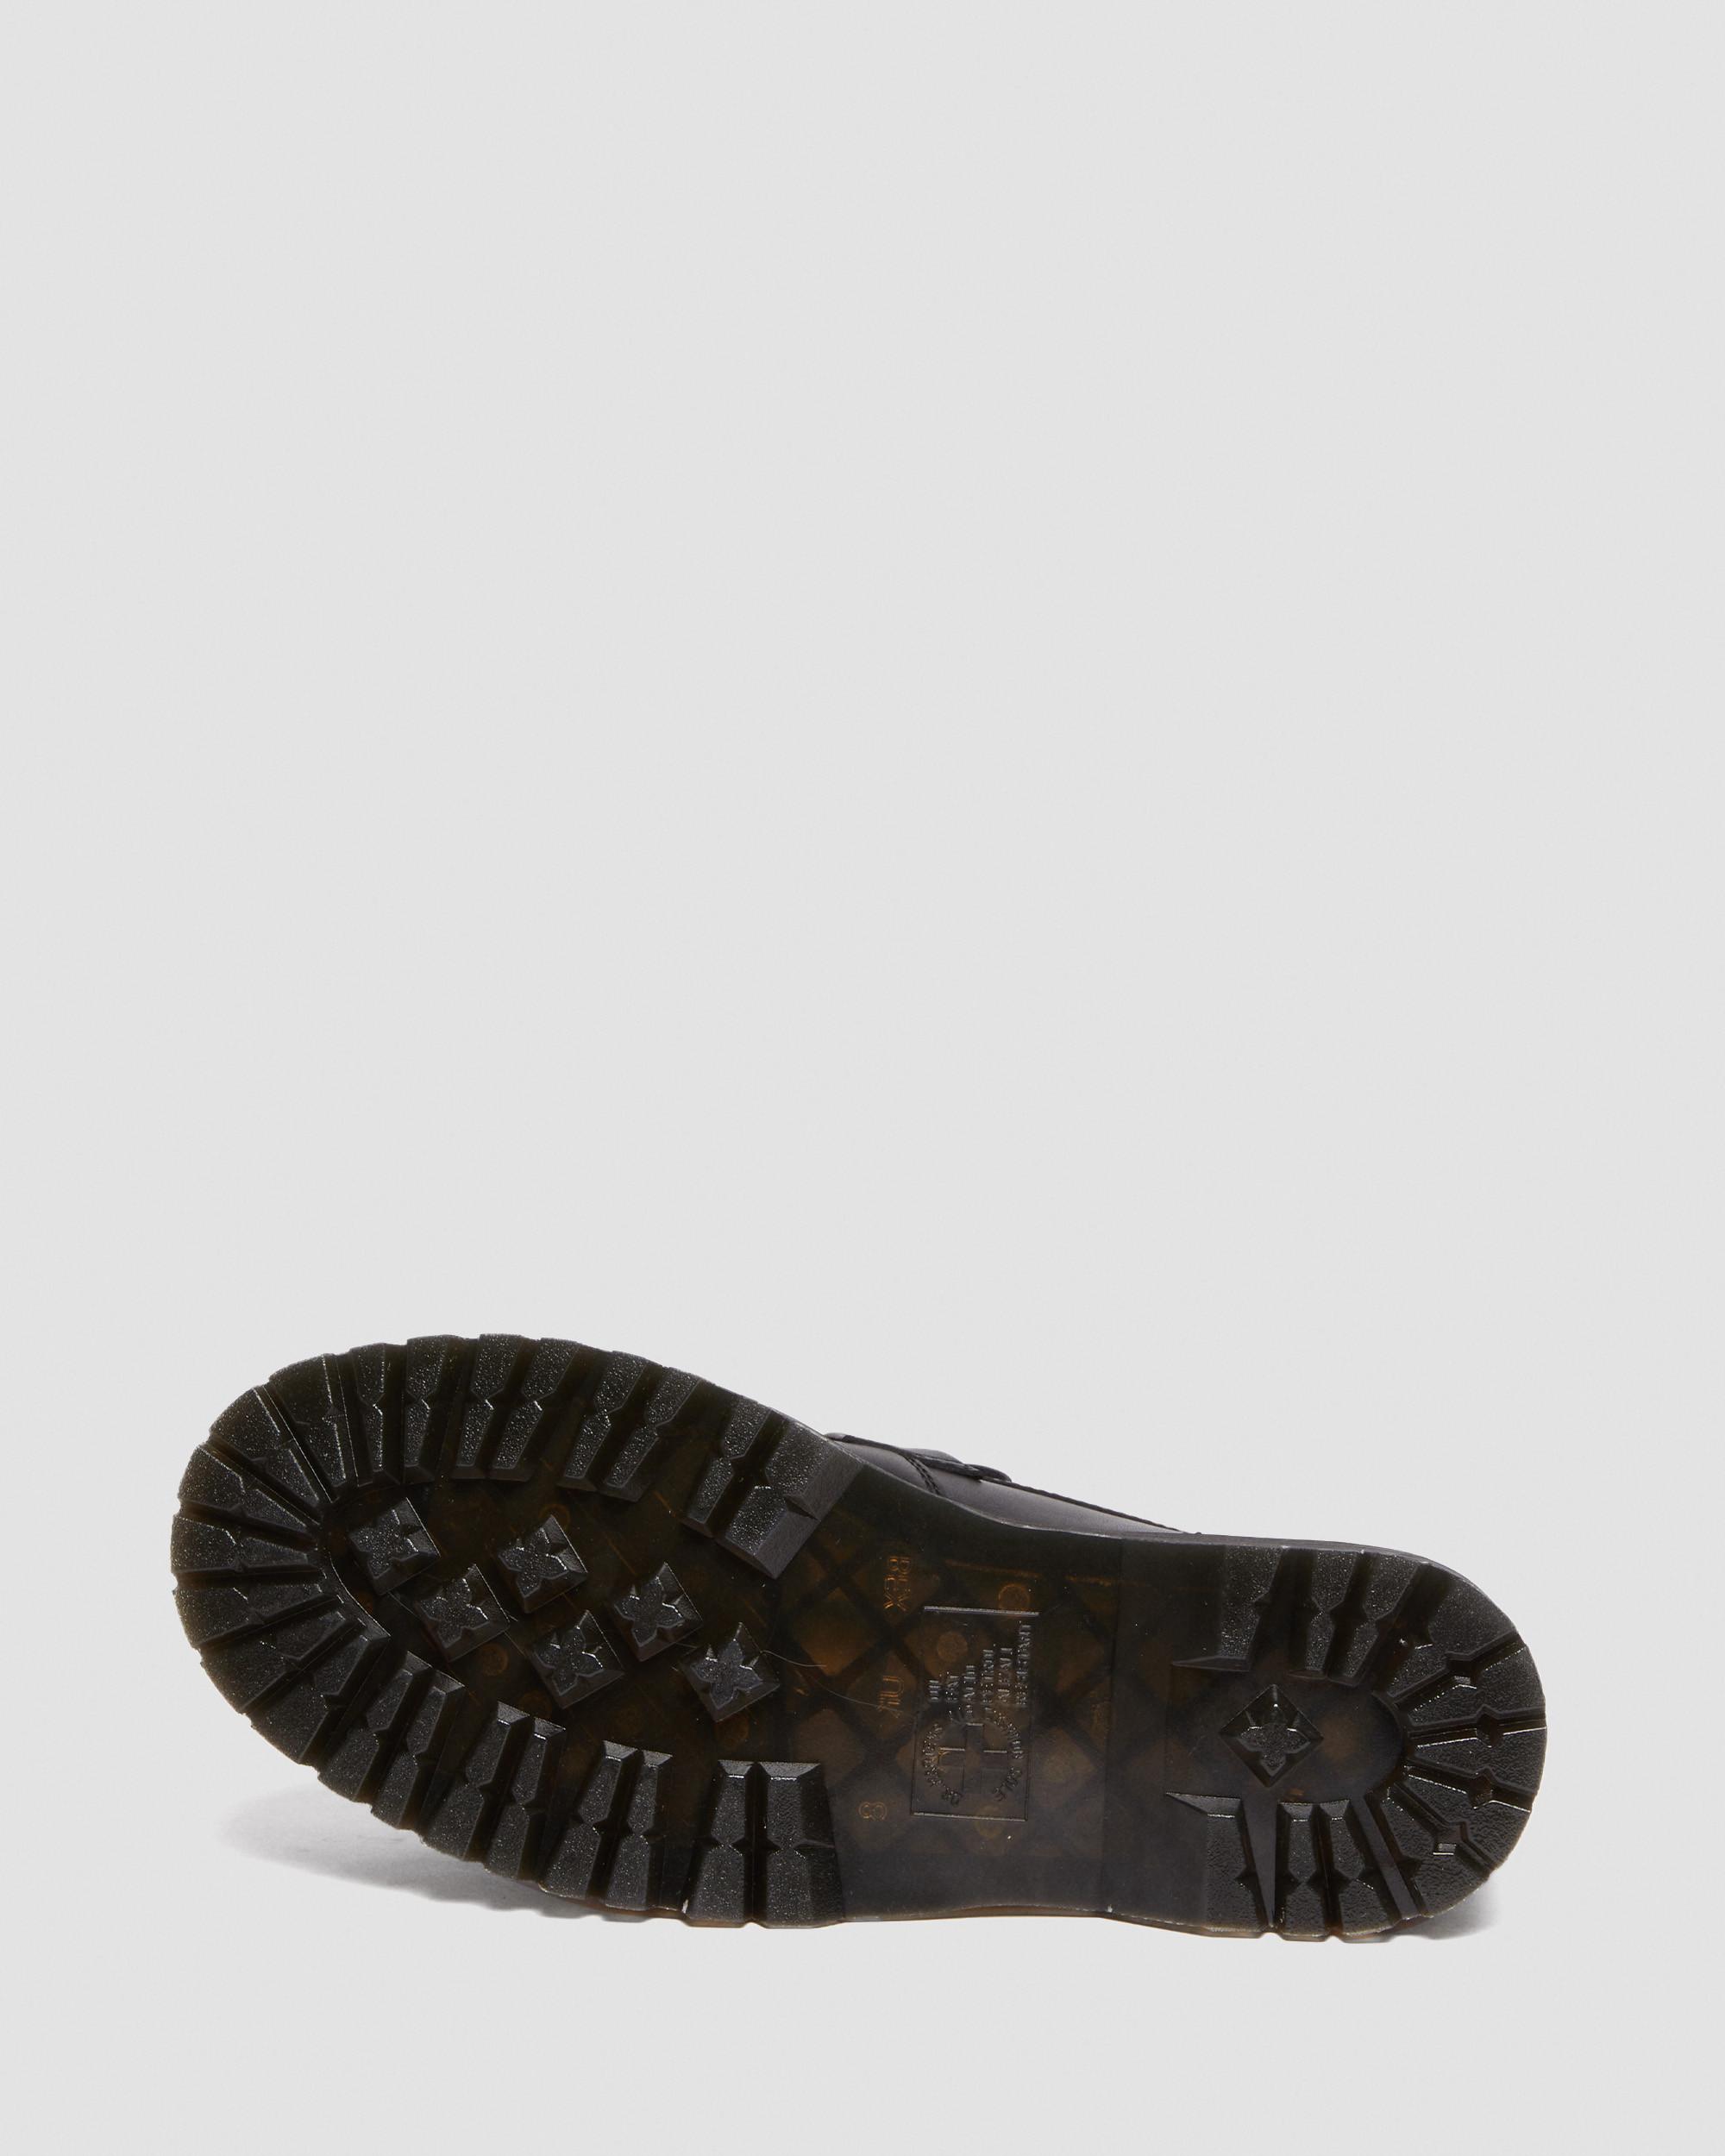 Adrian Quad Felix Vegan Platform Tassel Loafers in Black